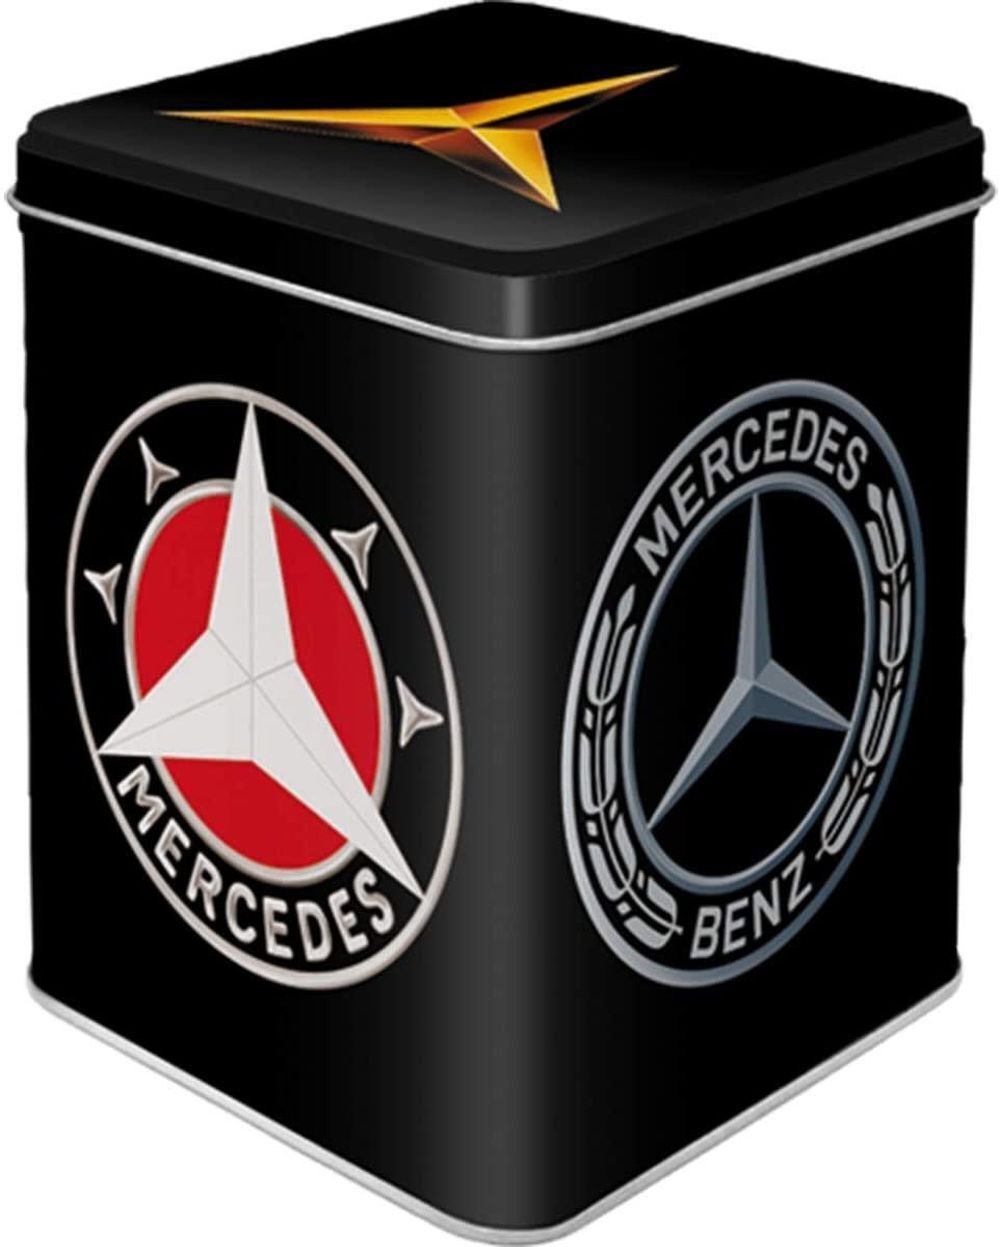 Nostalgic-Art - Small Metal Tea Sugar Storage Box Tin Jar - Mercedes Benz Logos